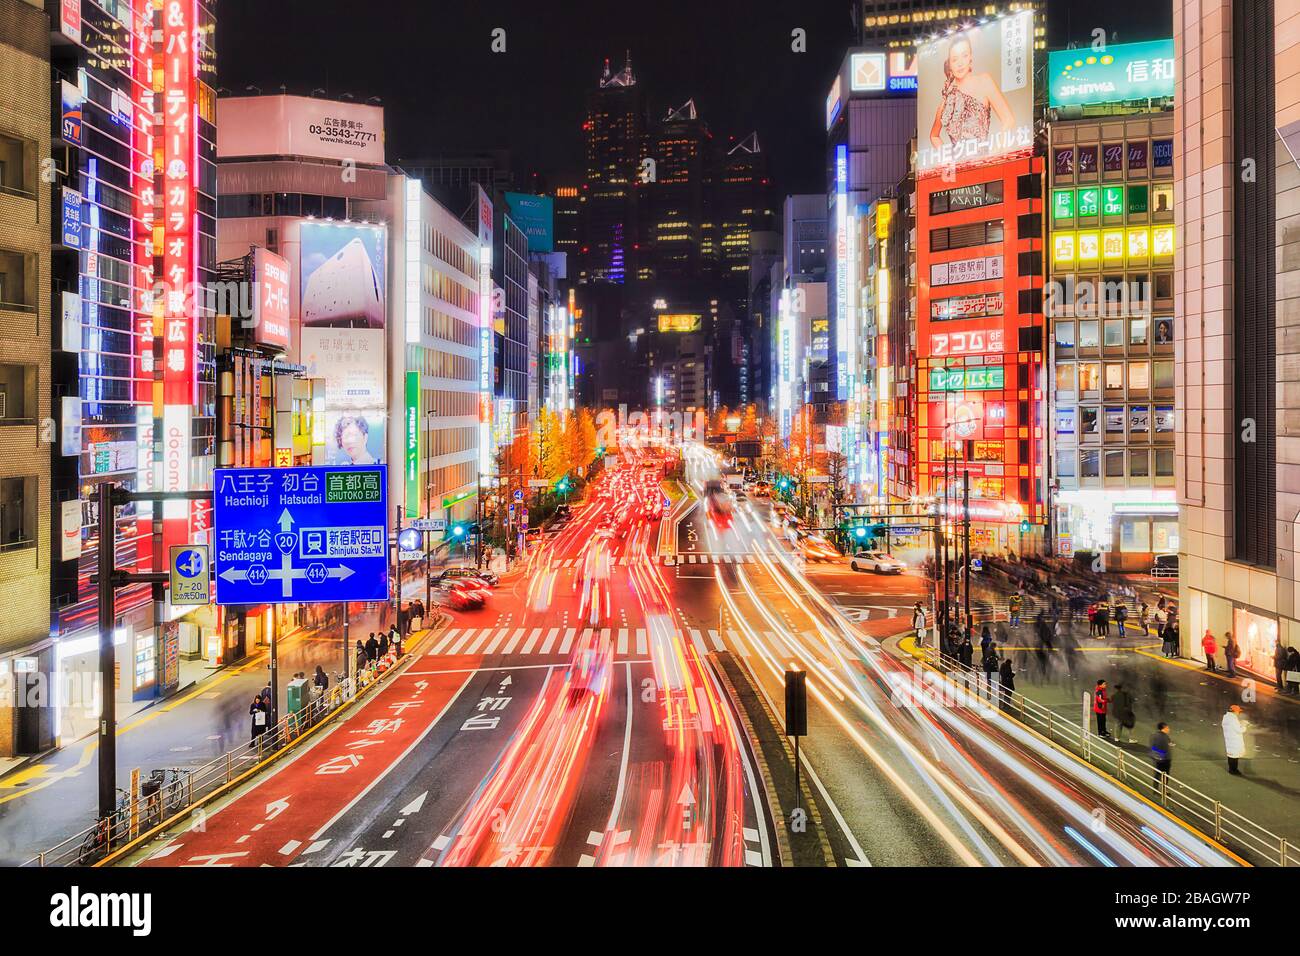 Tokyo, Japan - 31 Dec 2019: Tokyo city in Japan around Shinjuku-Shibuya business districts at night with bright illuminations and crowds of people cro Stock Photo